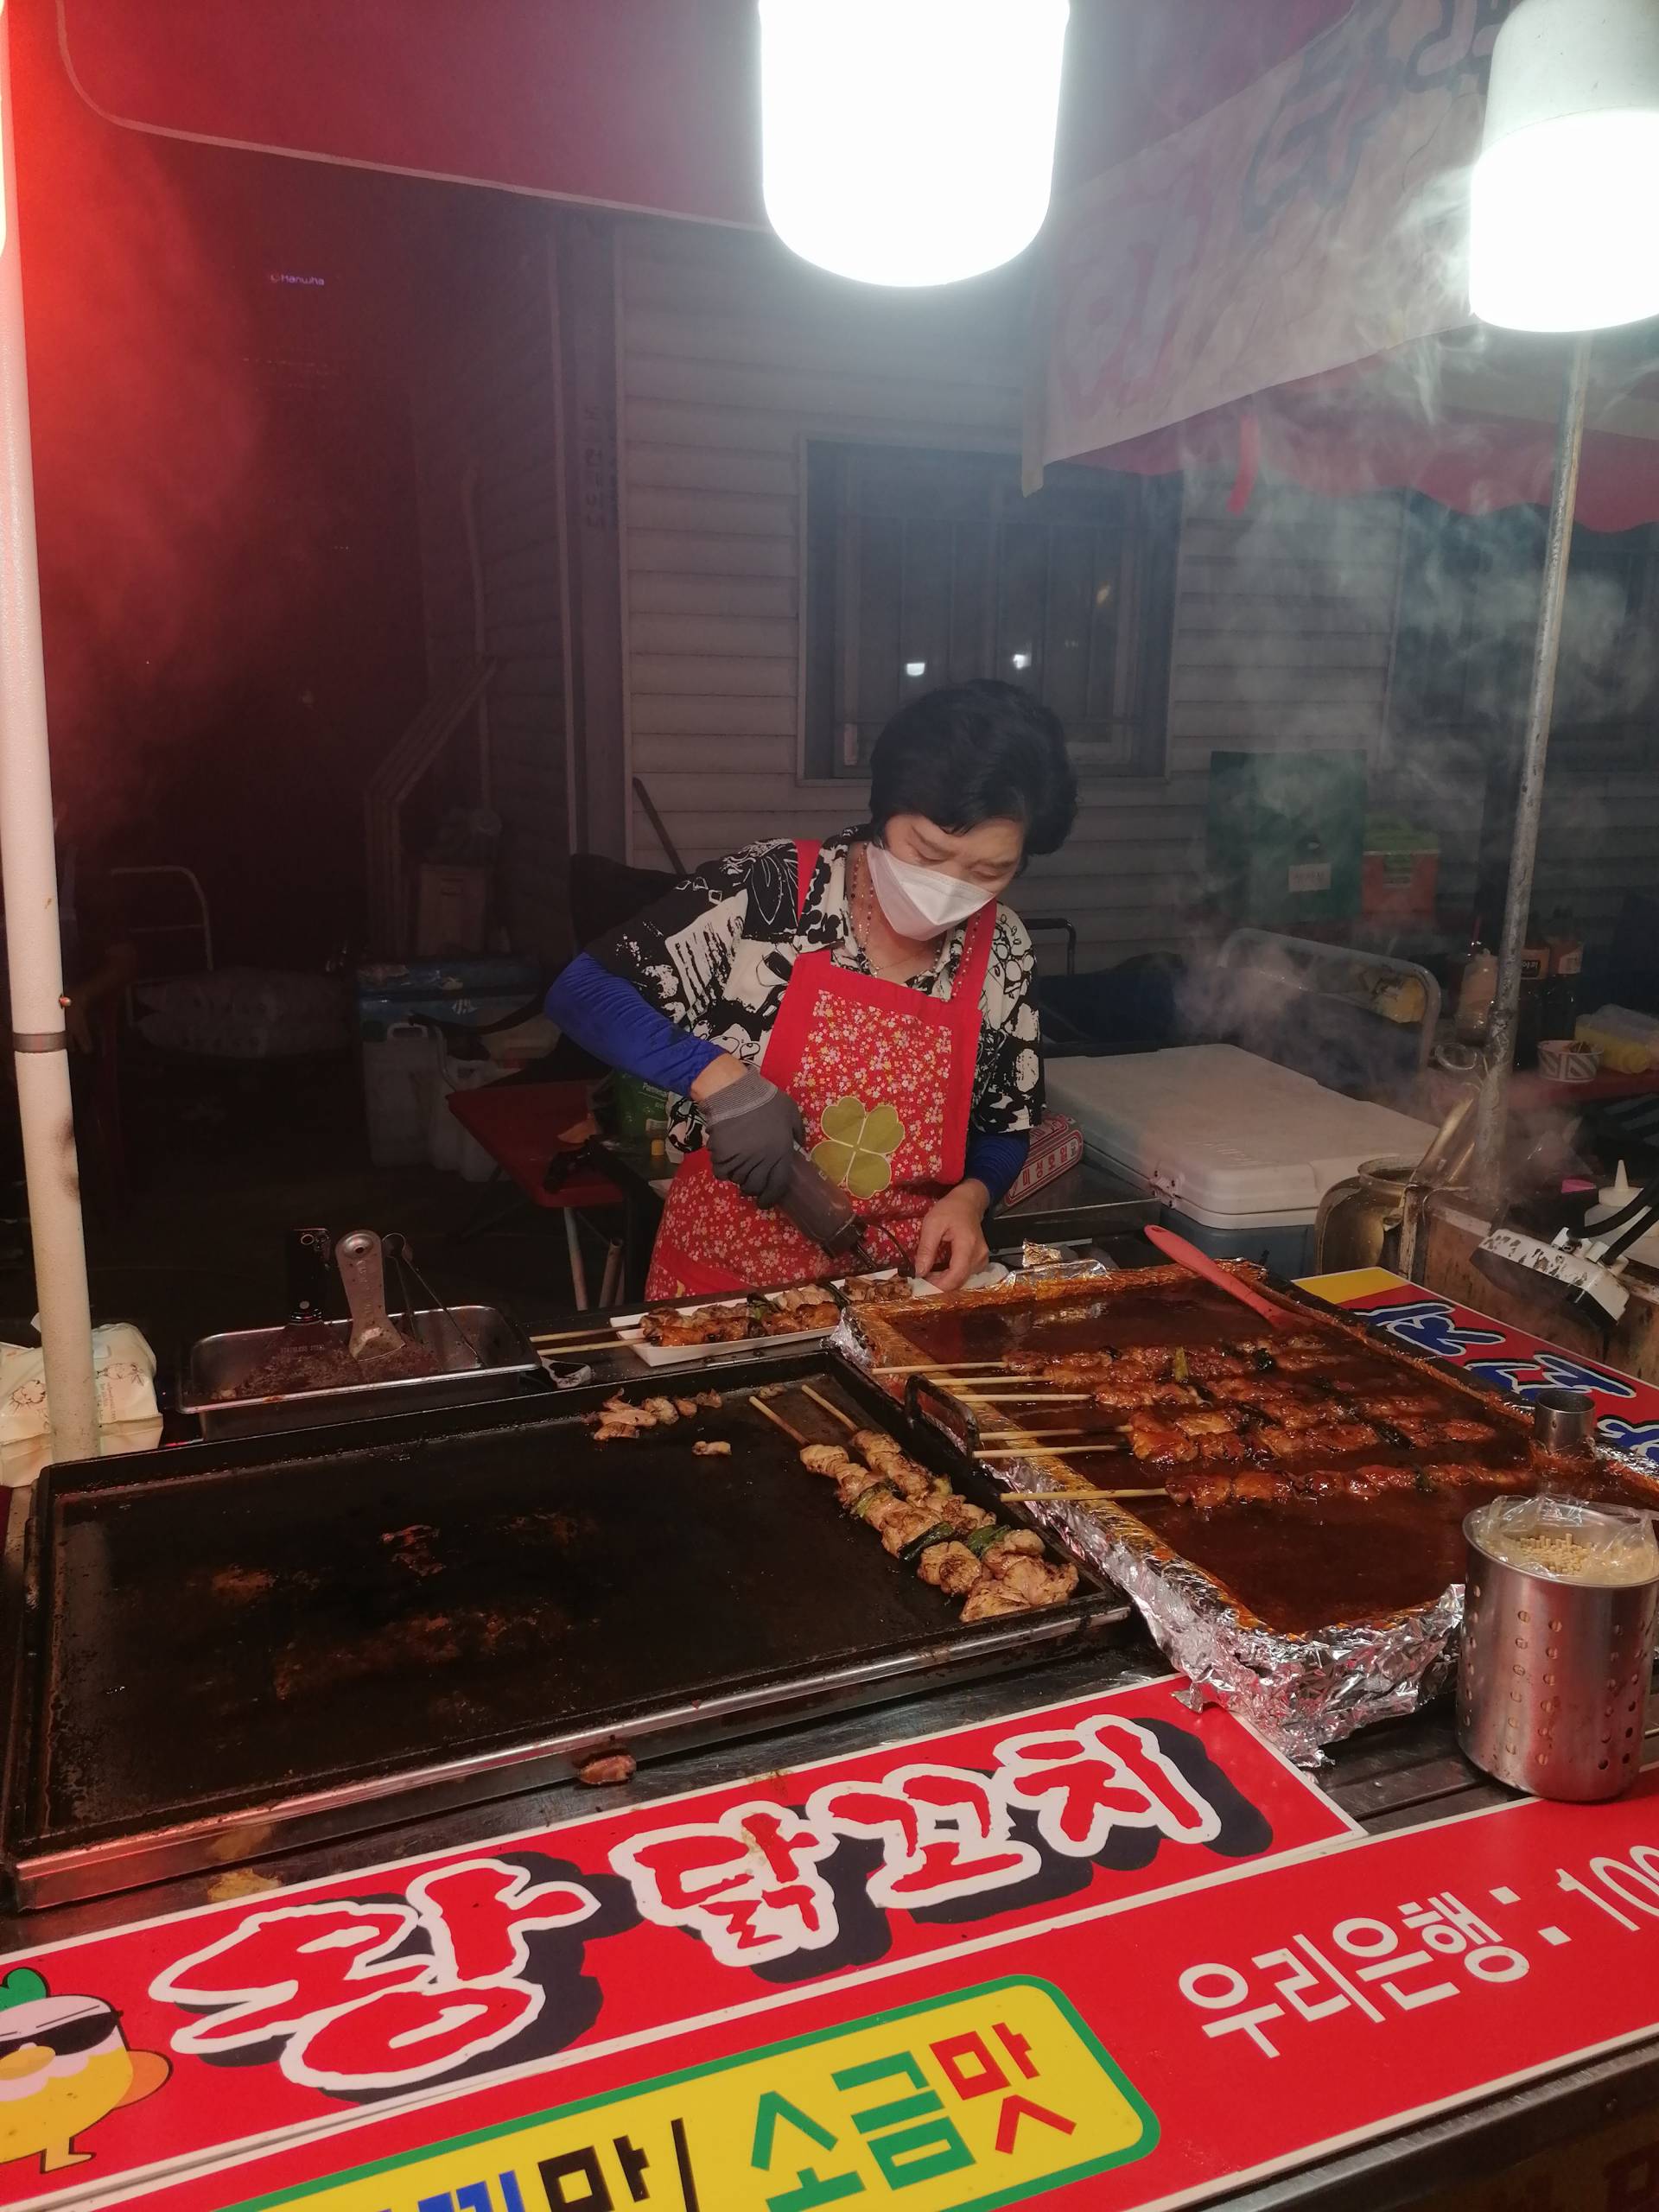 Street-Food-Stand einer 아줌마 (Ajumma - Frau mittleren Alters) am Han River Park